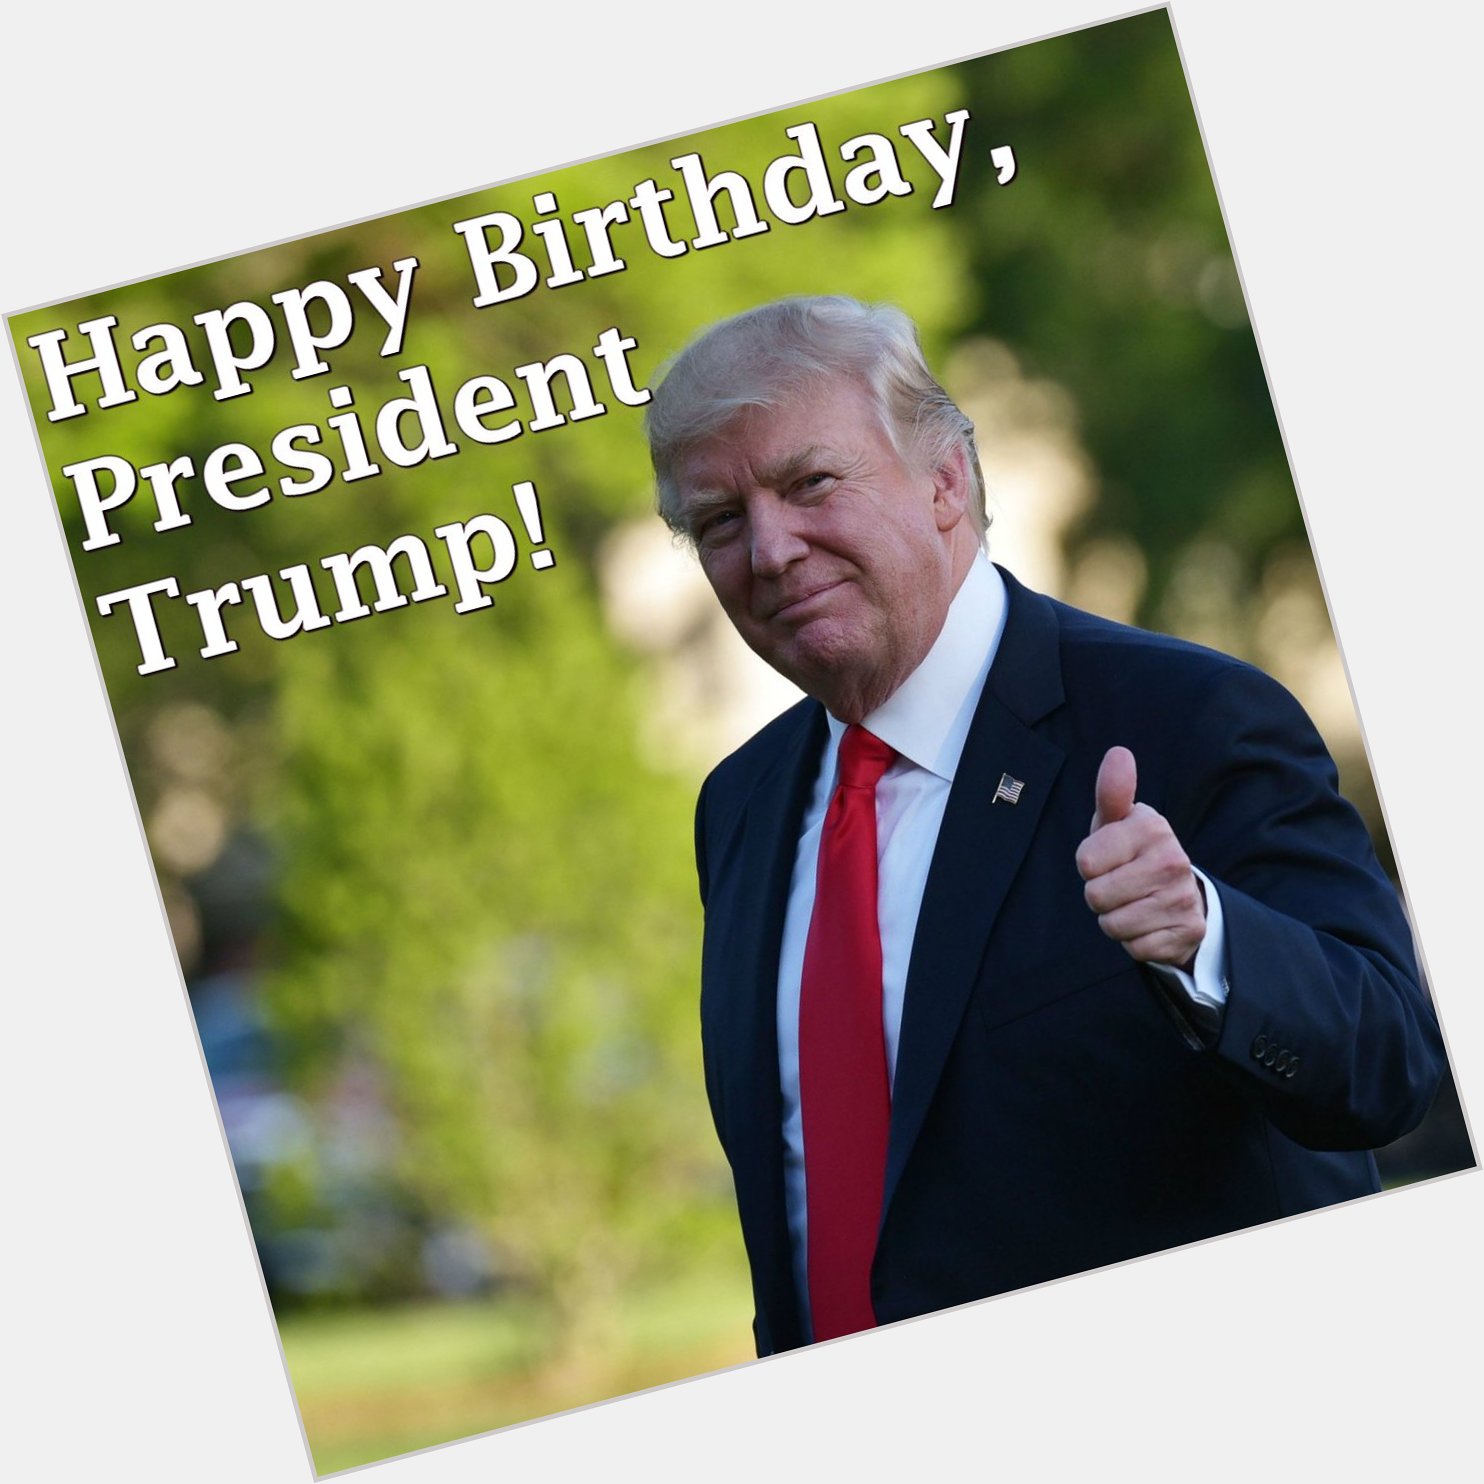 Wishing a very happy 72nd birthday to President Donald Trump! 